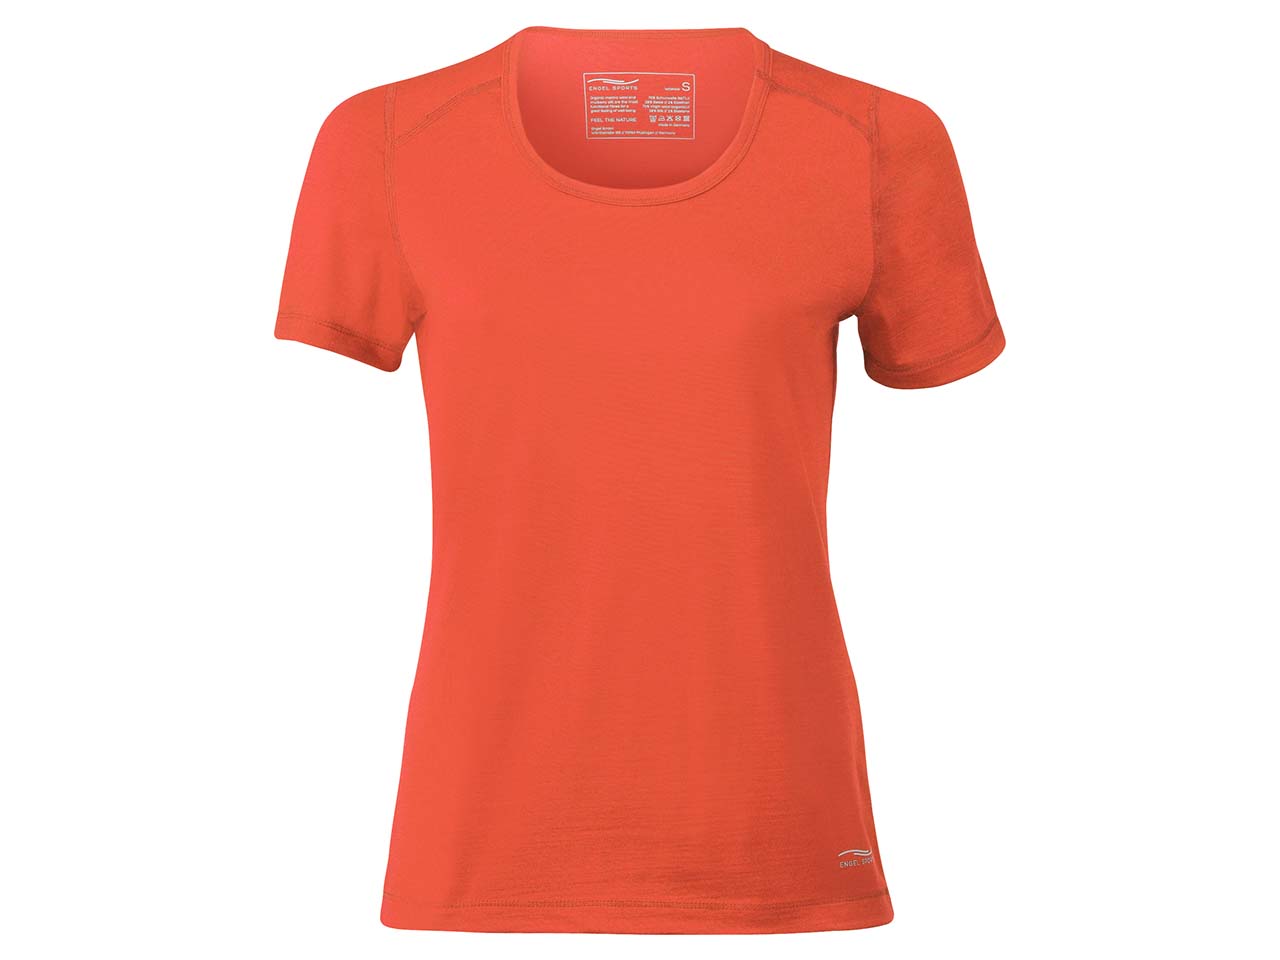 Engel Sports Damen Kurzarm-Shirt Sportshirt kurzärmlig Bio-Wolle/Seide 